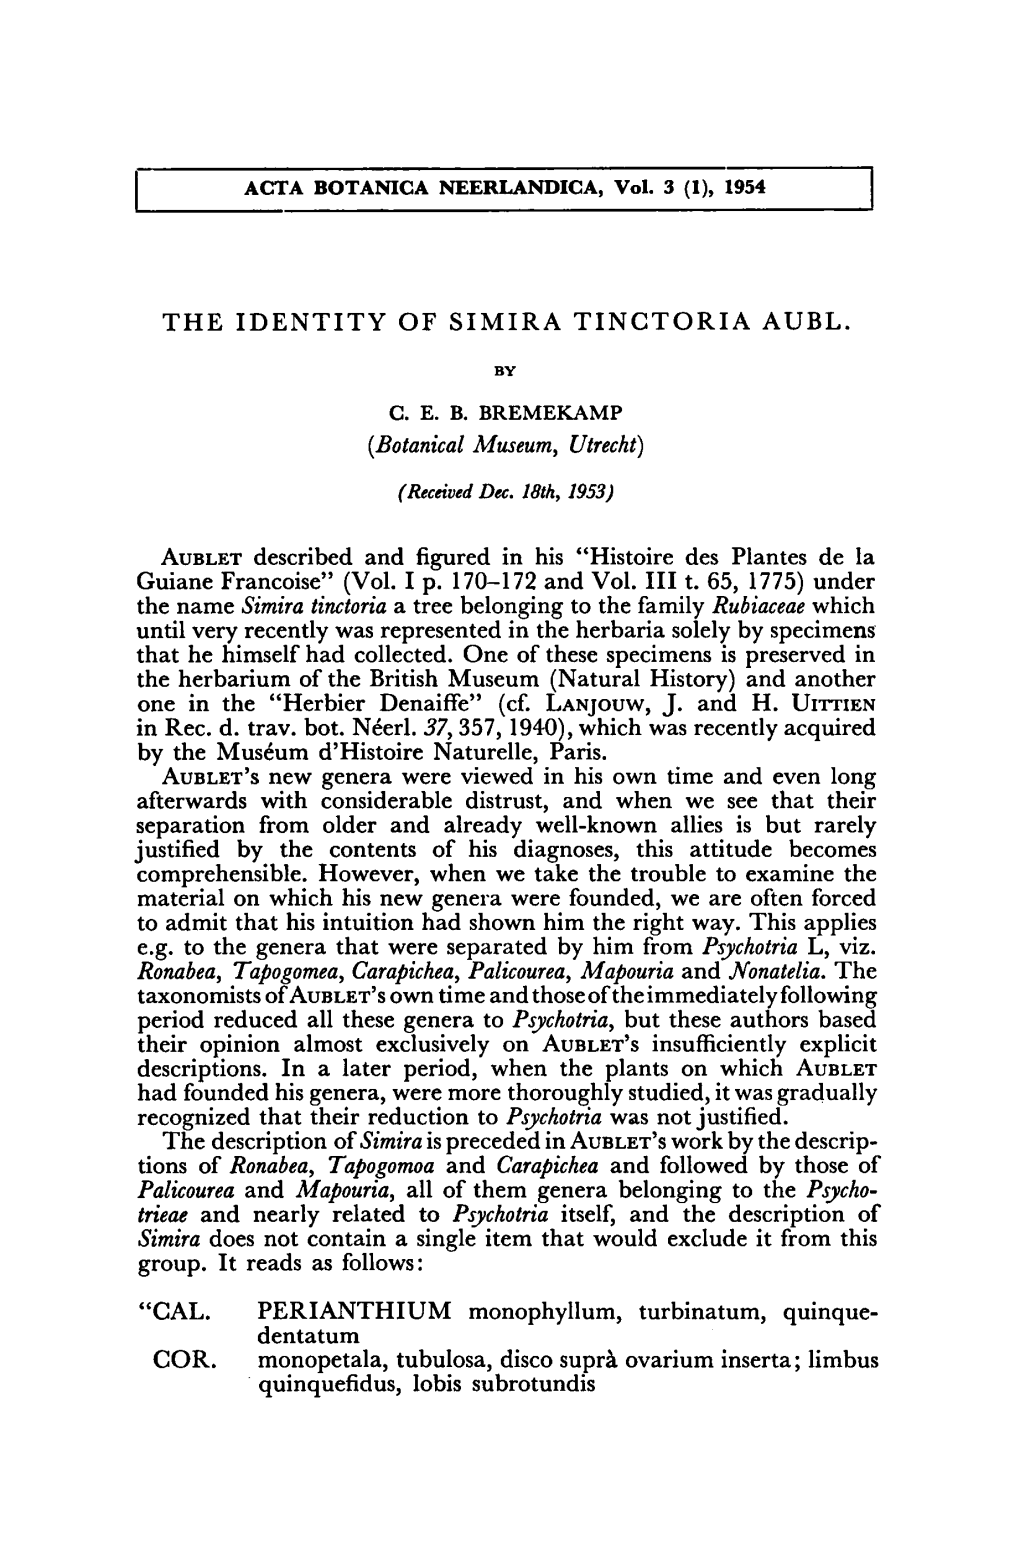 The Identity of Simira Tinctoria Aubl